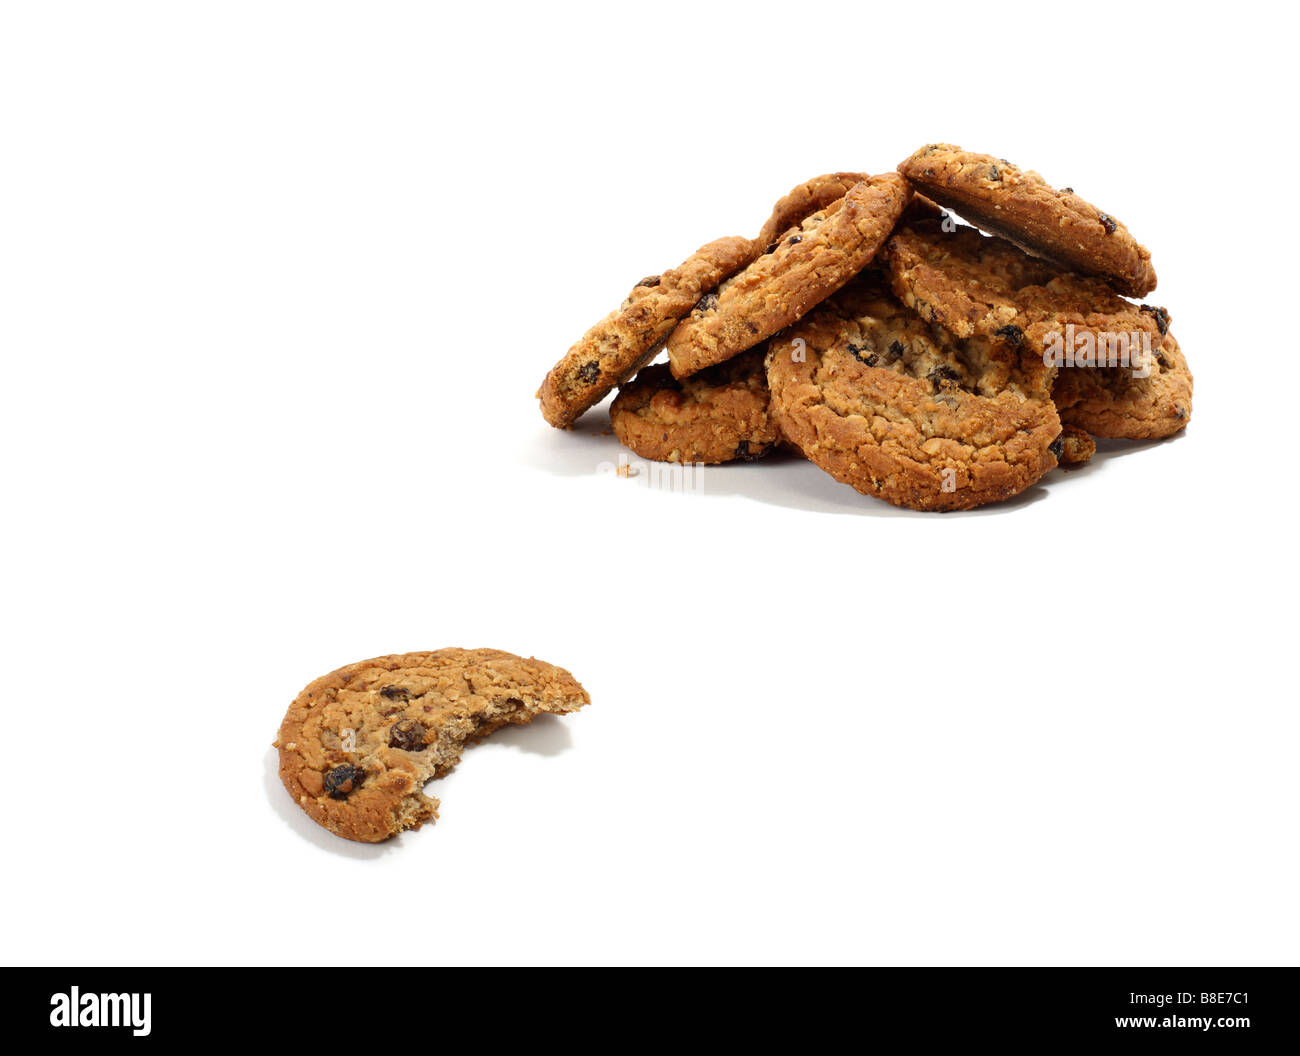 Stapel von Rosinen Haferflocken Cookies Stockfoto